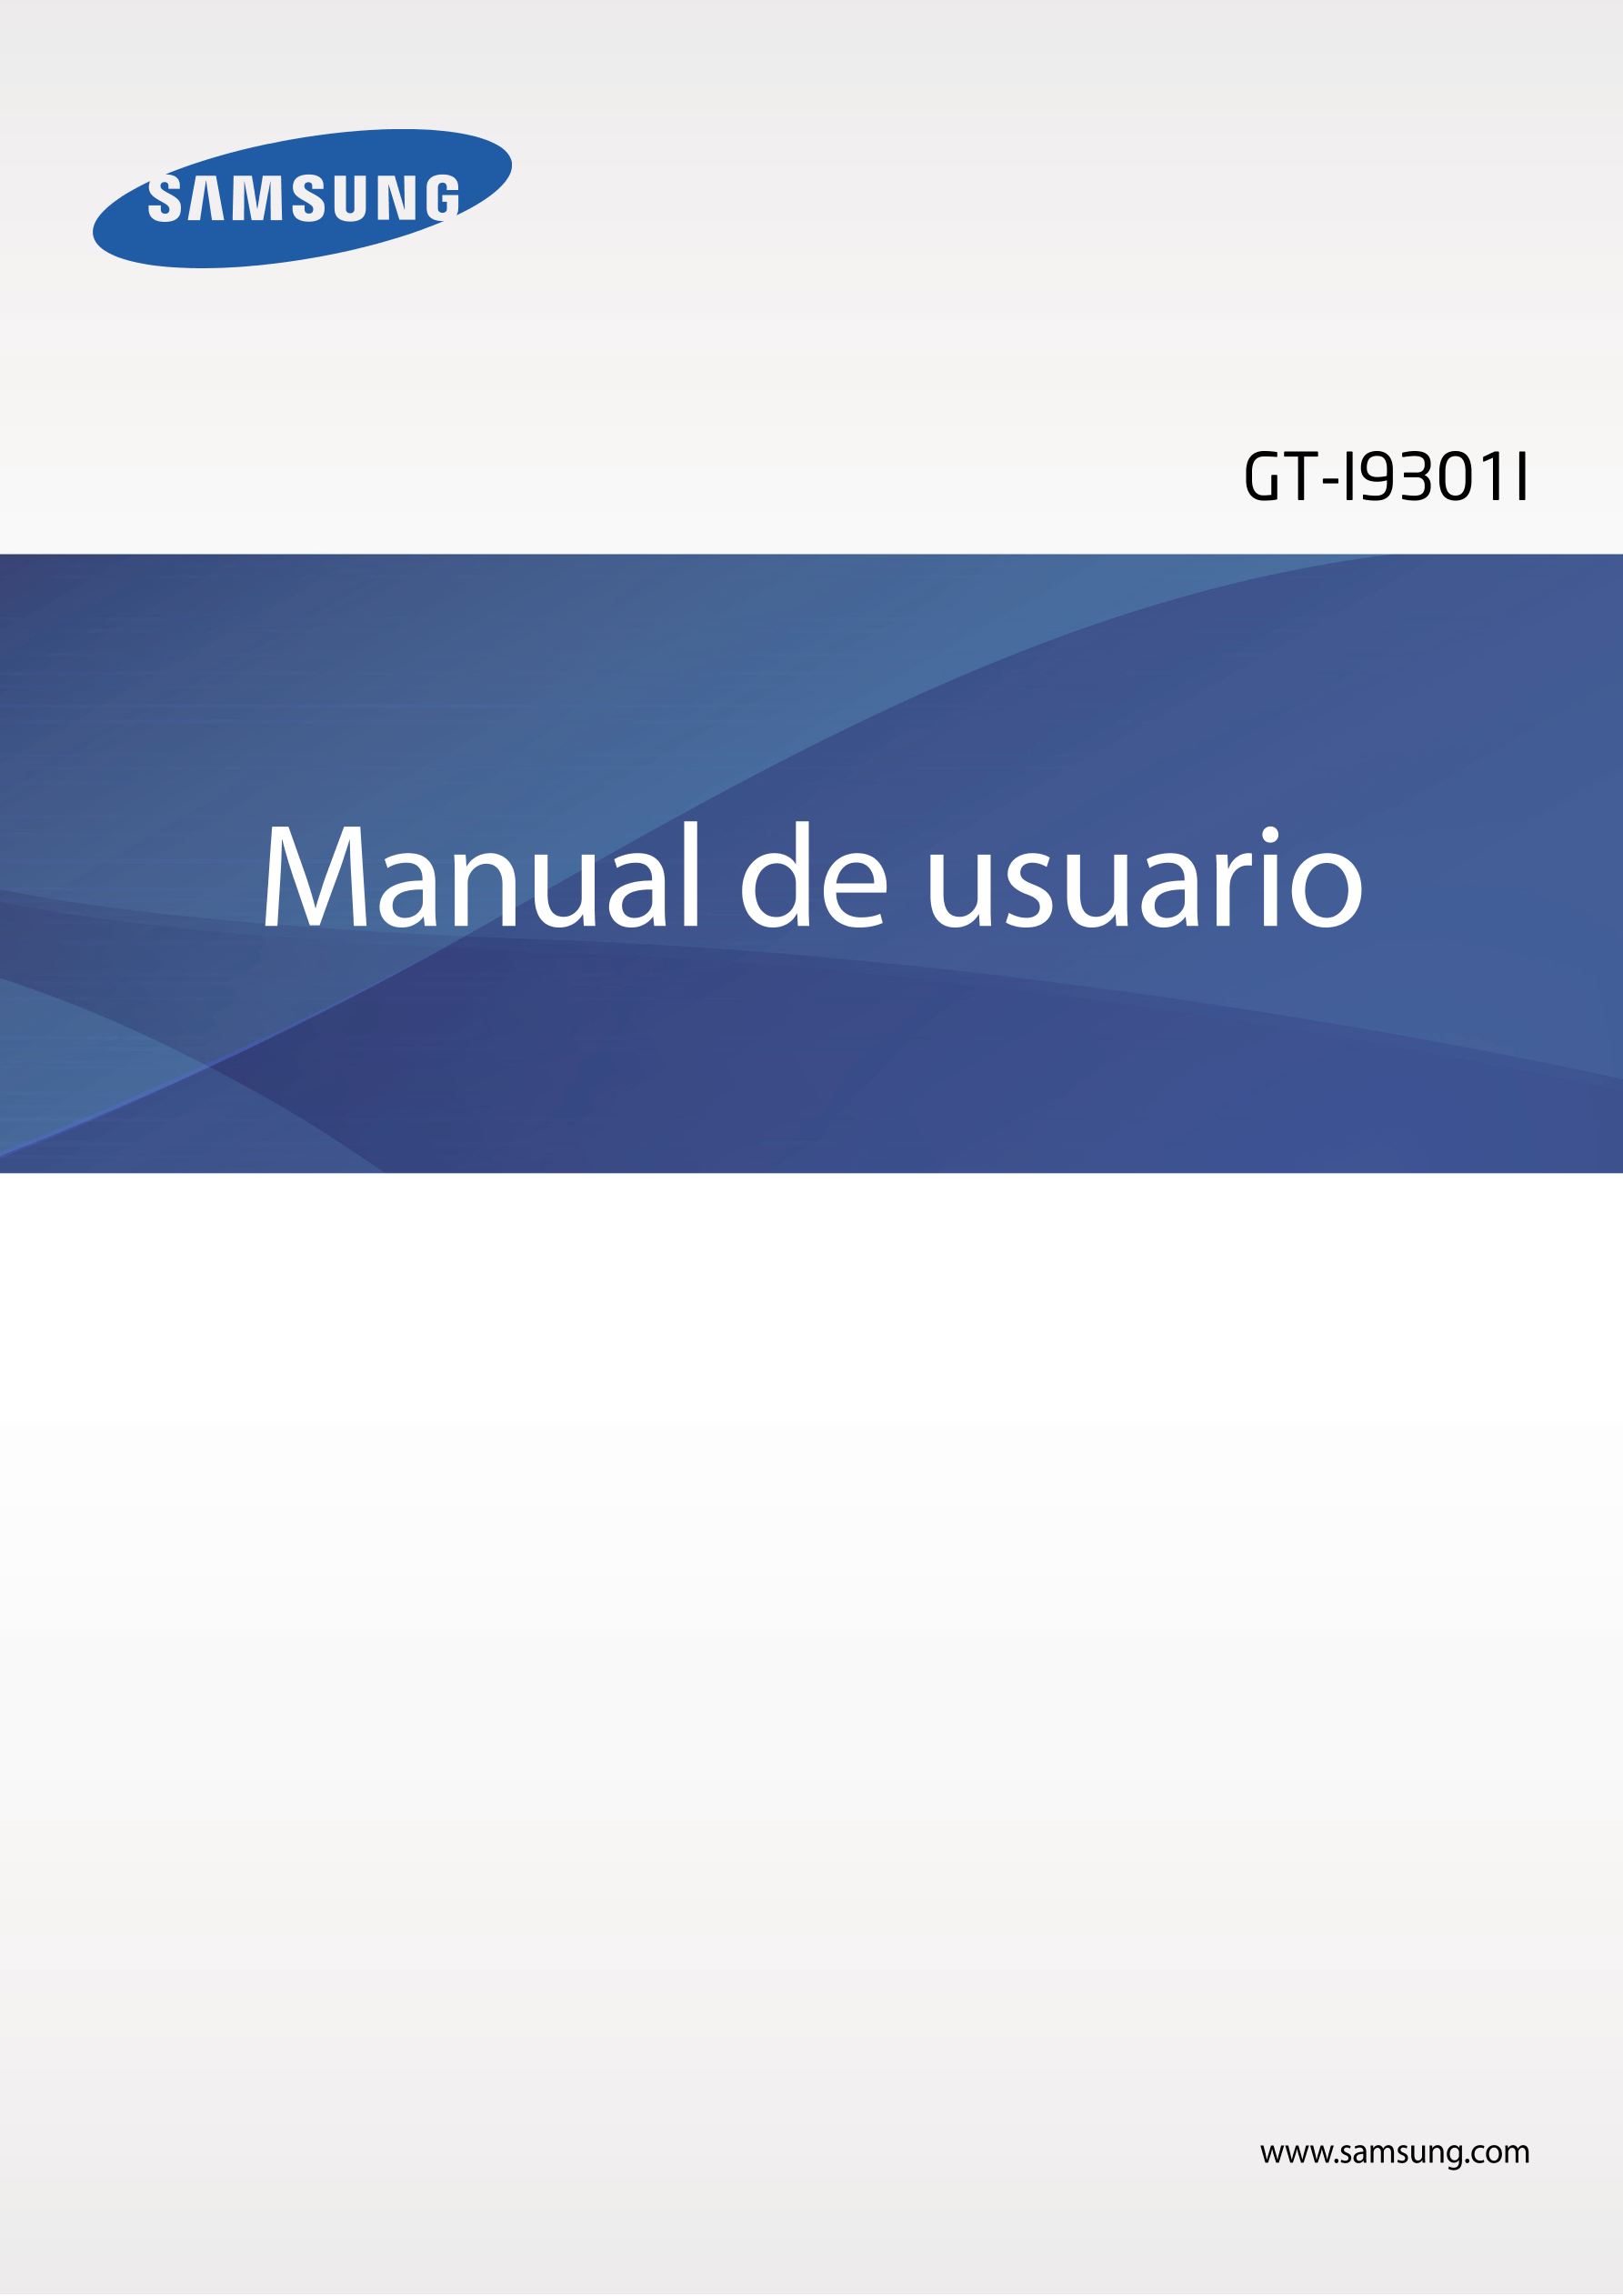 GT-I9301I
Manual de usuario
www.samsung.com